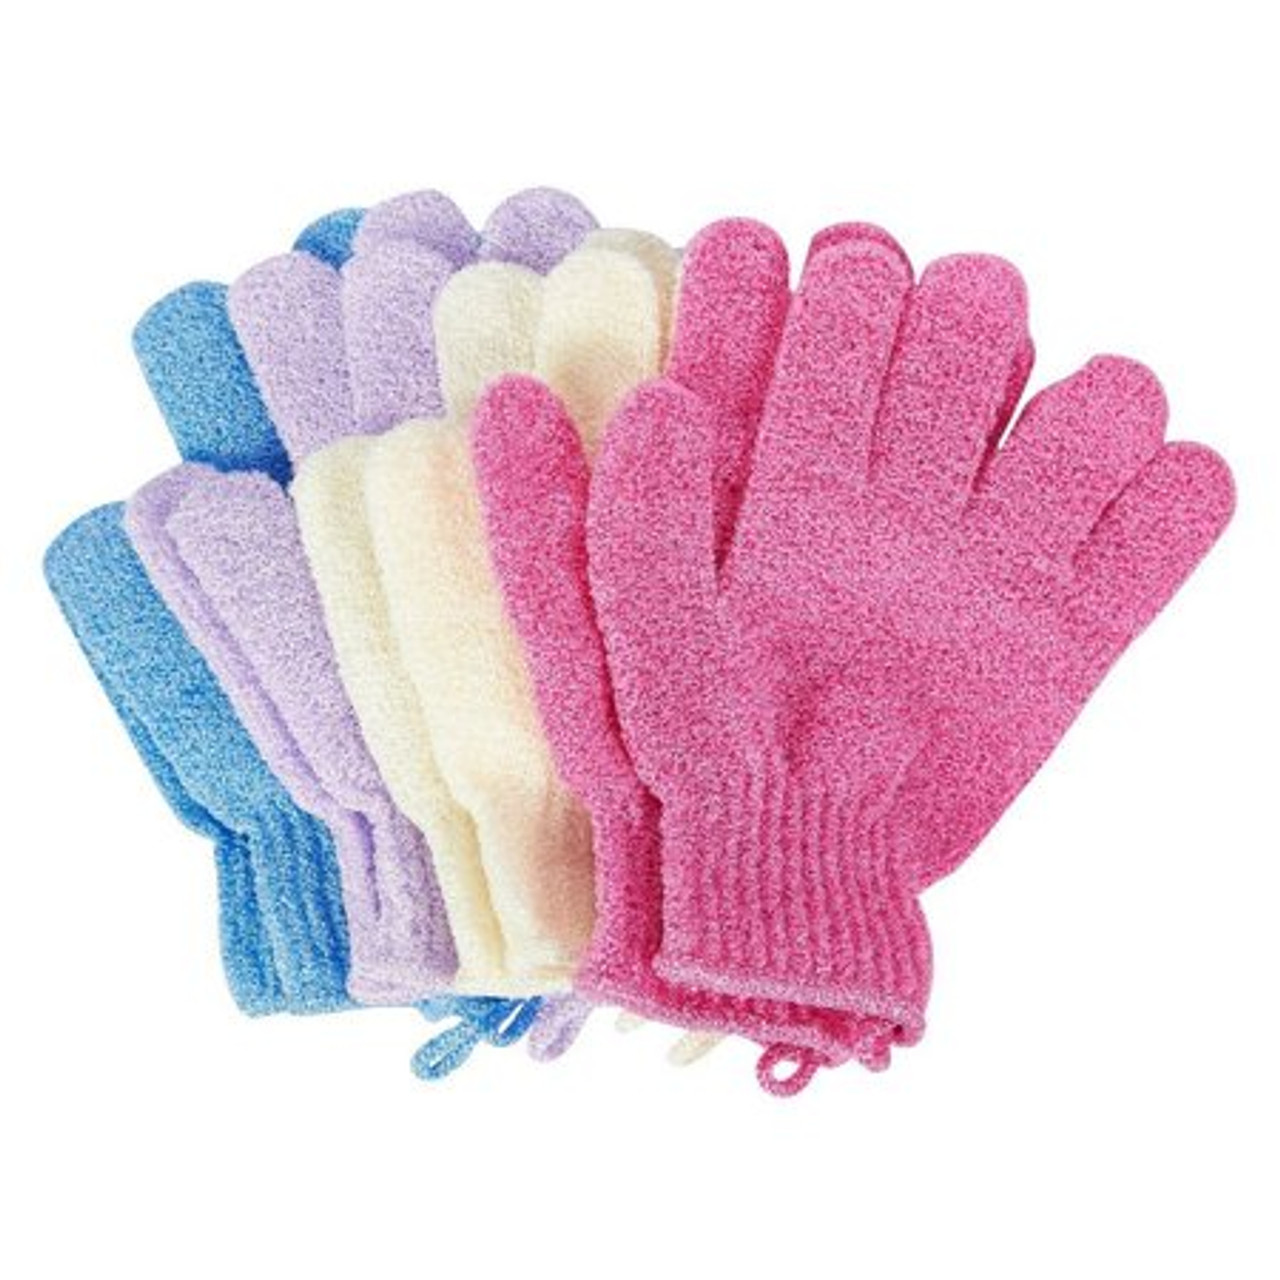 Exfoliating Scrubbing Gloves